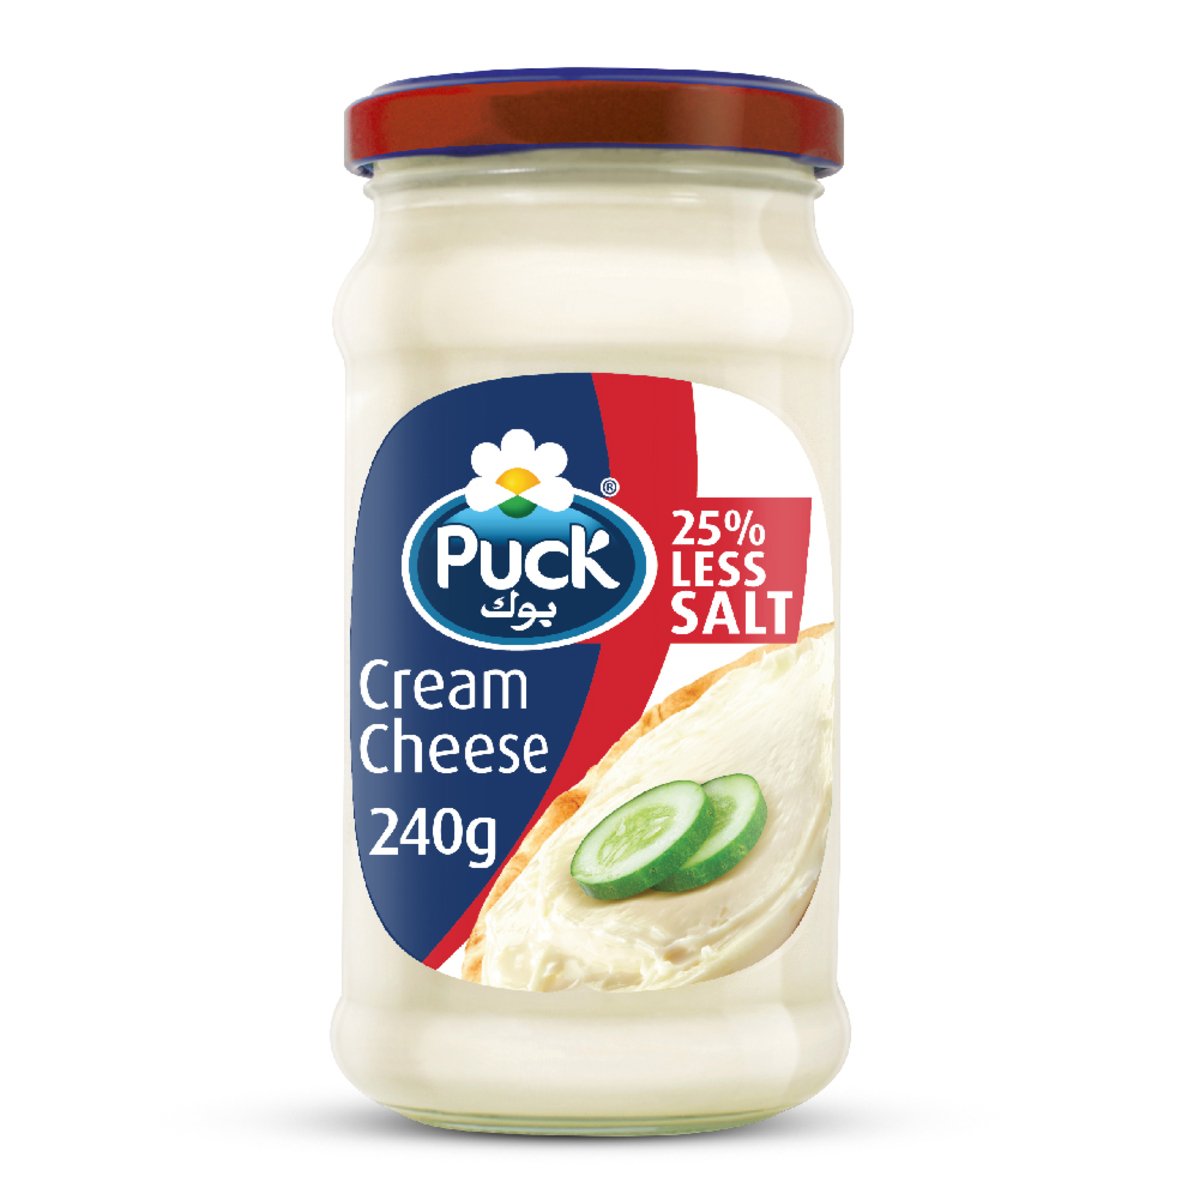 Puck Cream Cheese Low Salt Spread 240g